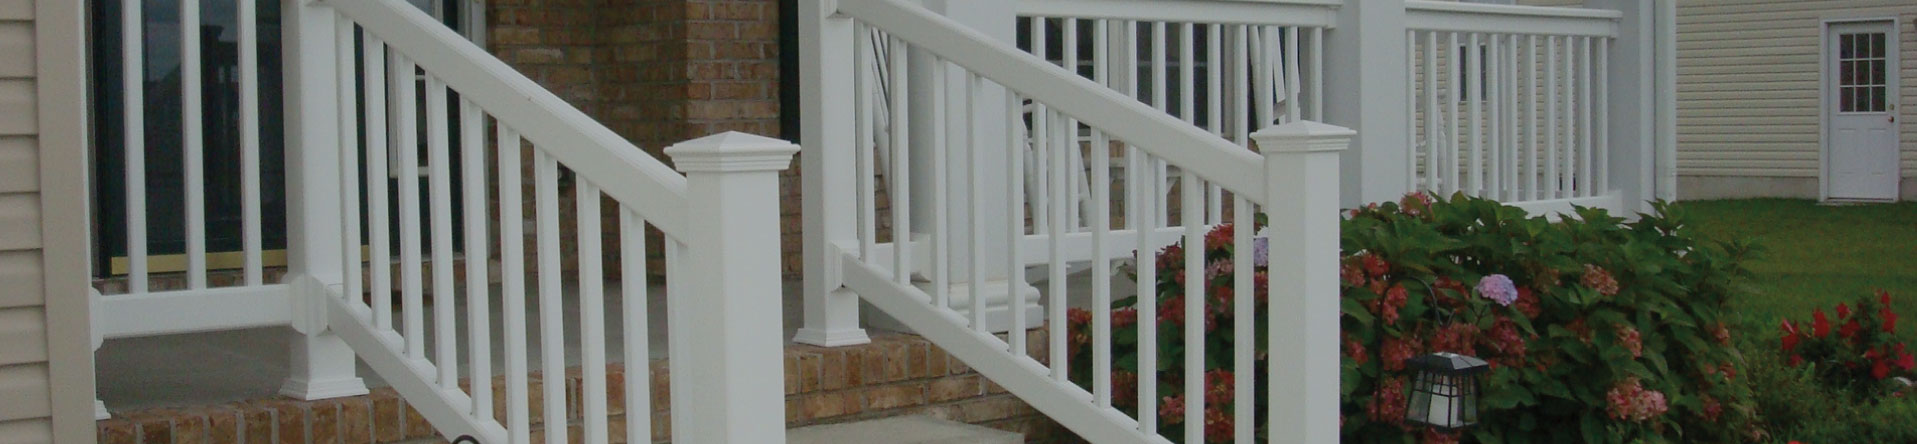 porch railings va beach